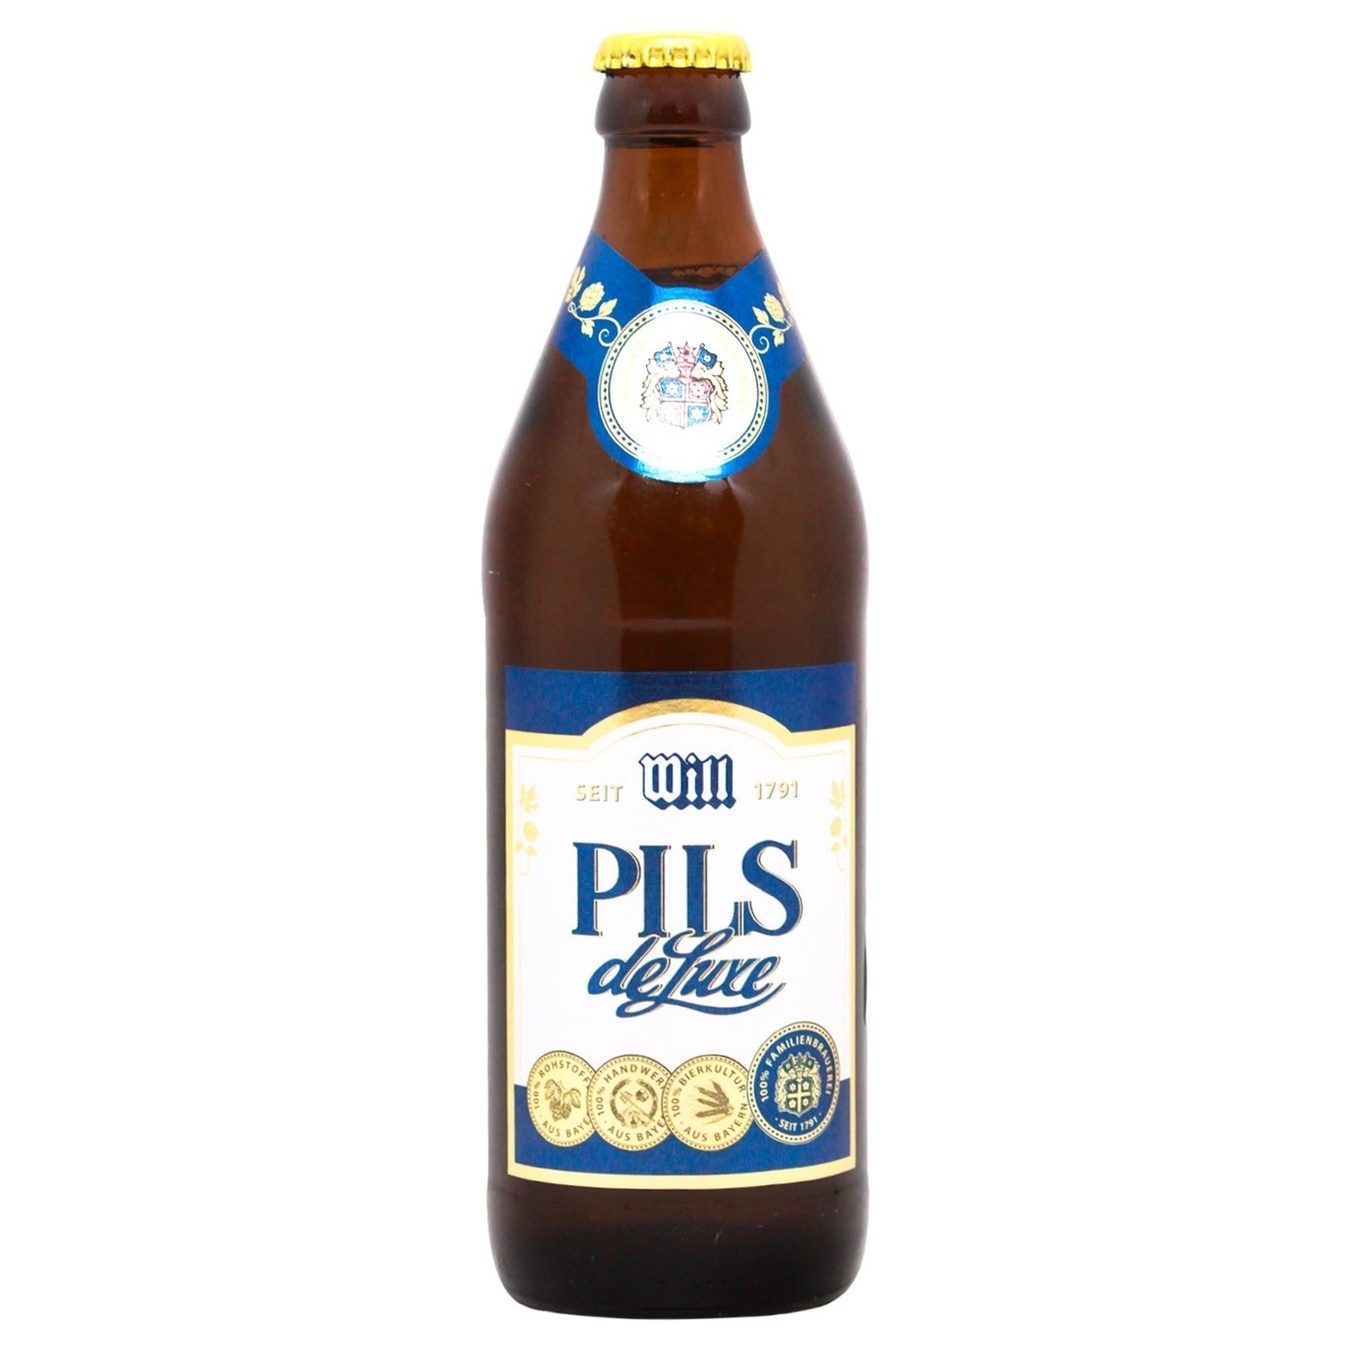 Пиво Will Brau Pils deLuxe светлое 4,9% 0,5л стеклянная бутылка